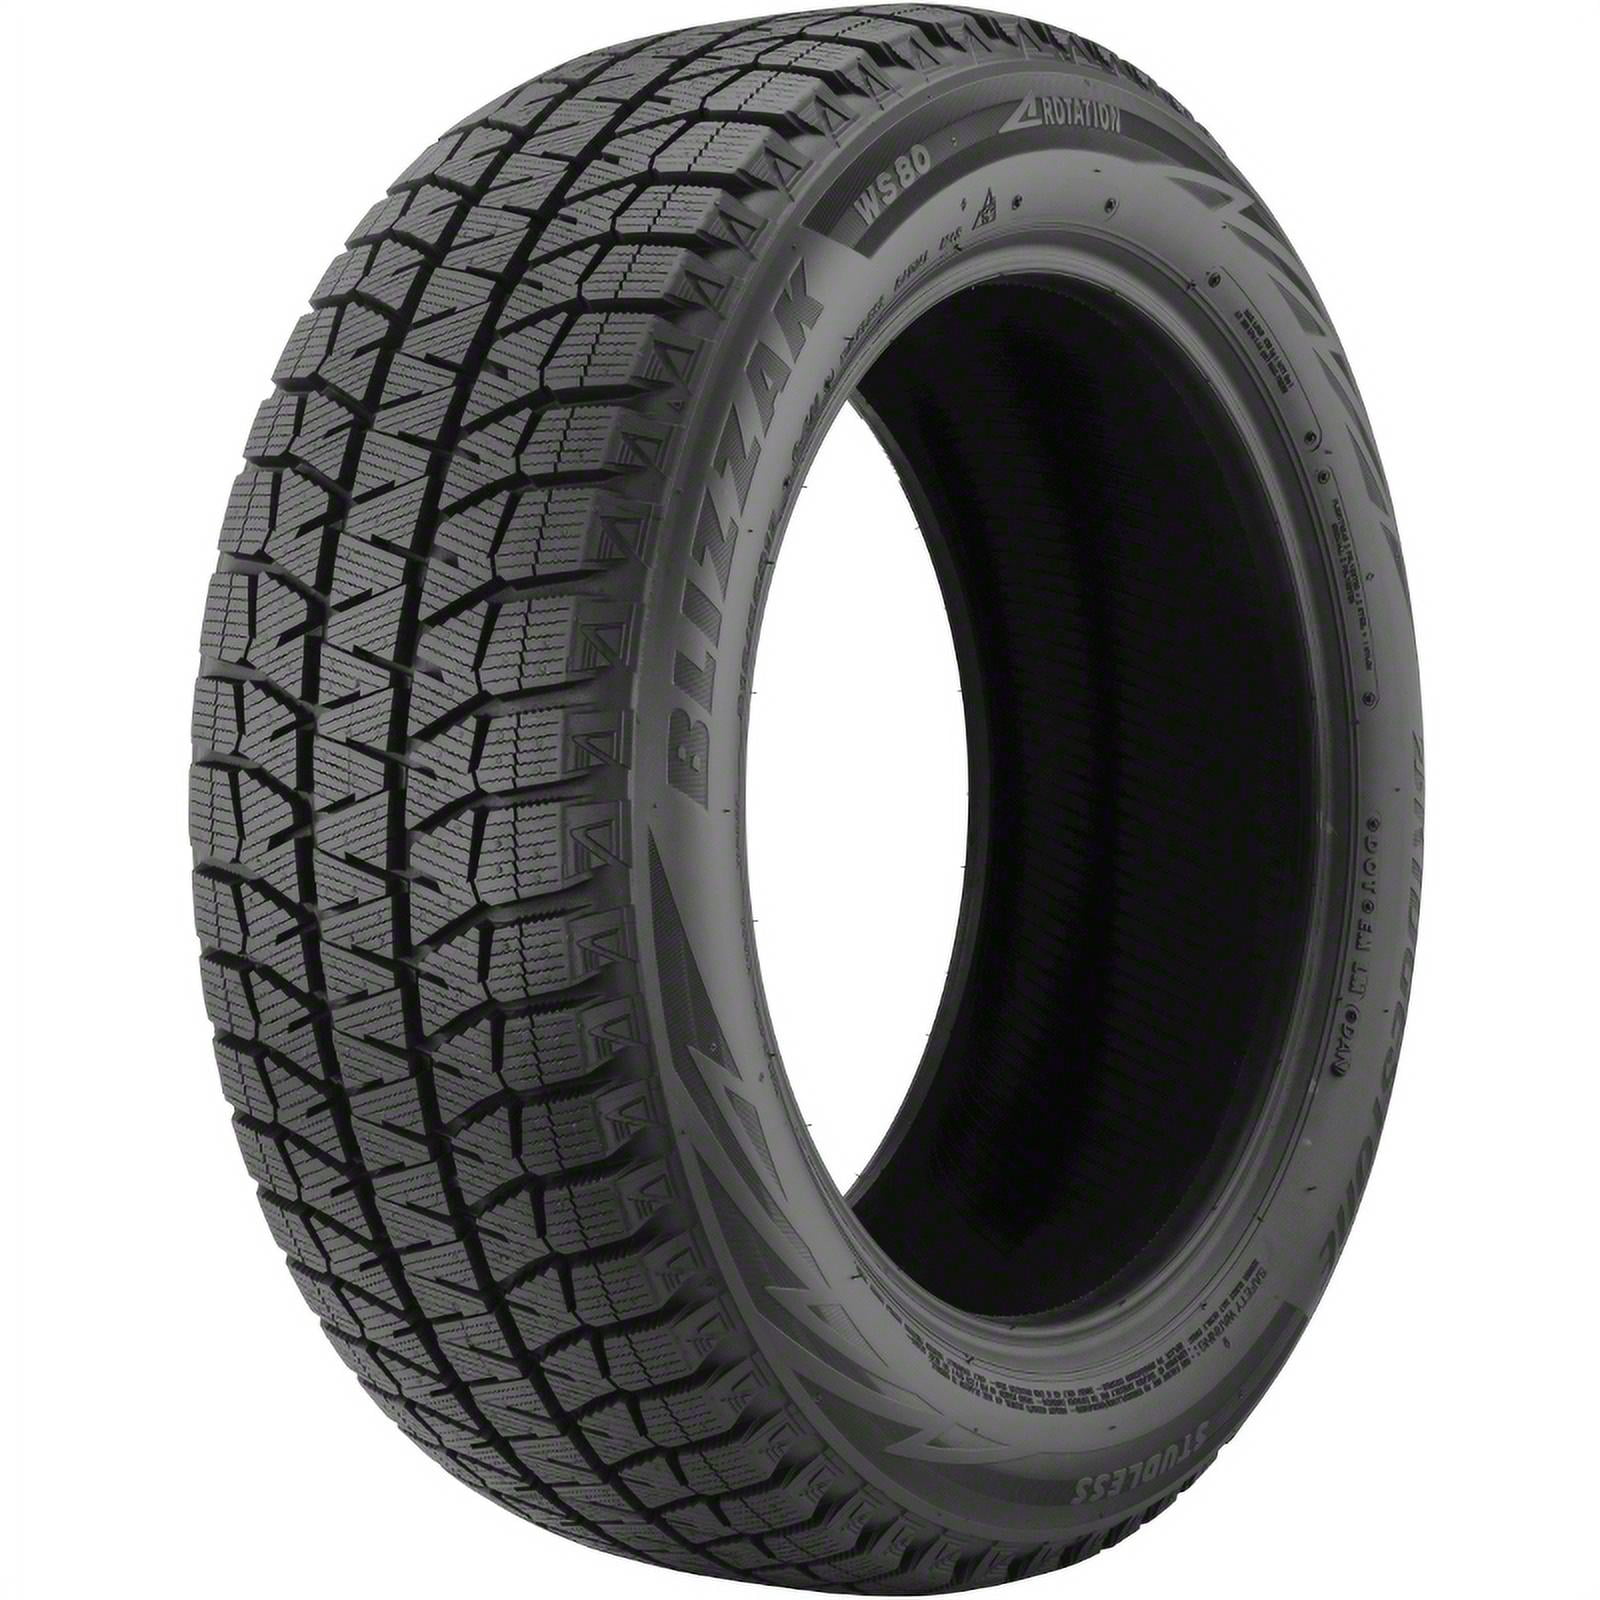 Bridgestone Blizzak WS80 225/65R17 102 H Tire - Walmart.com